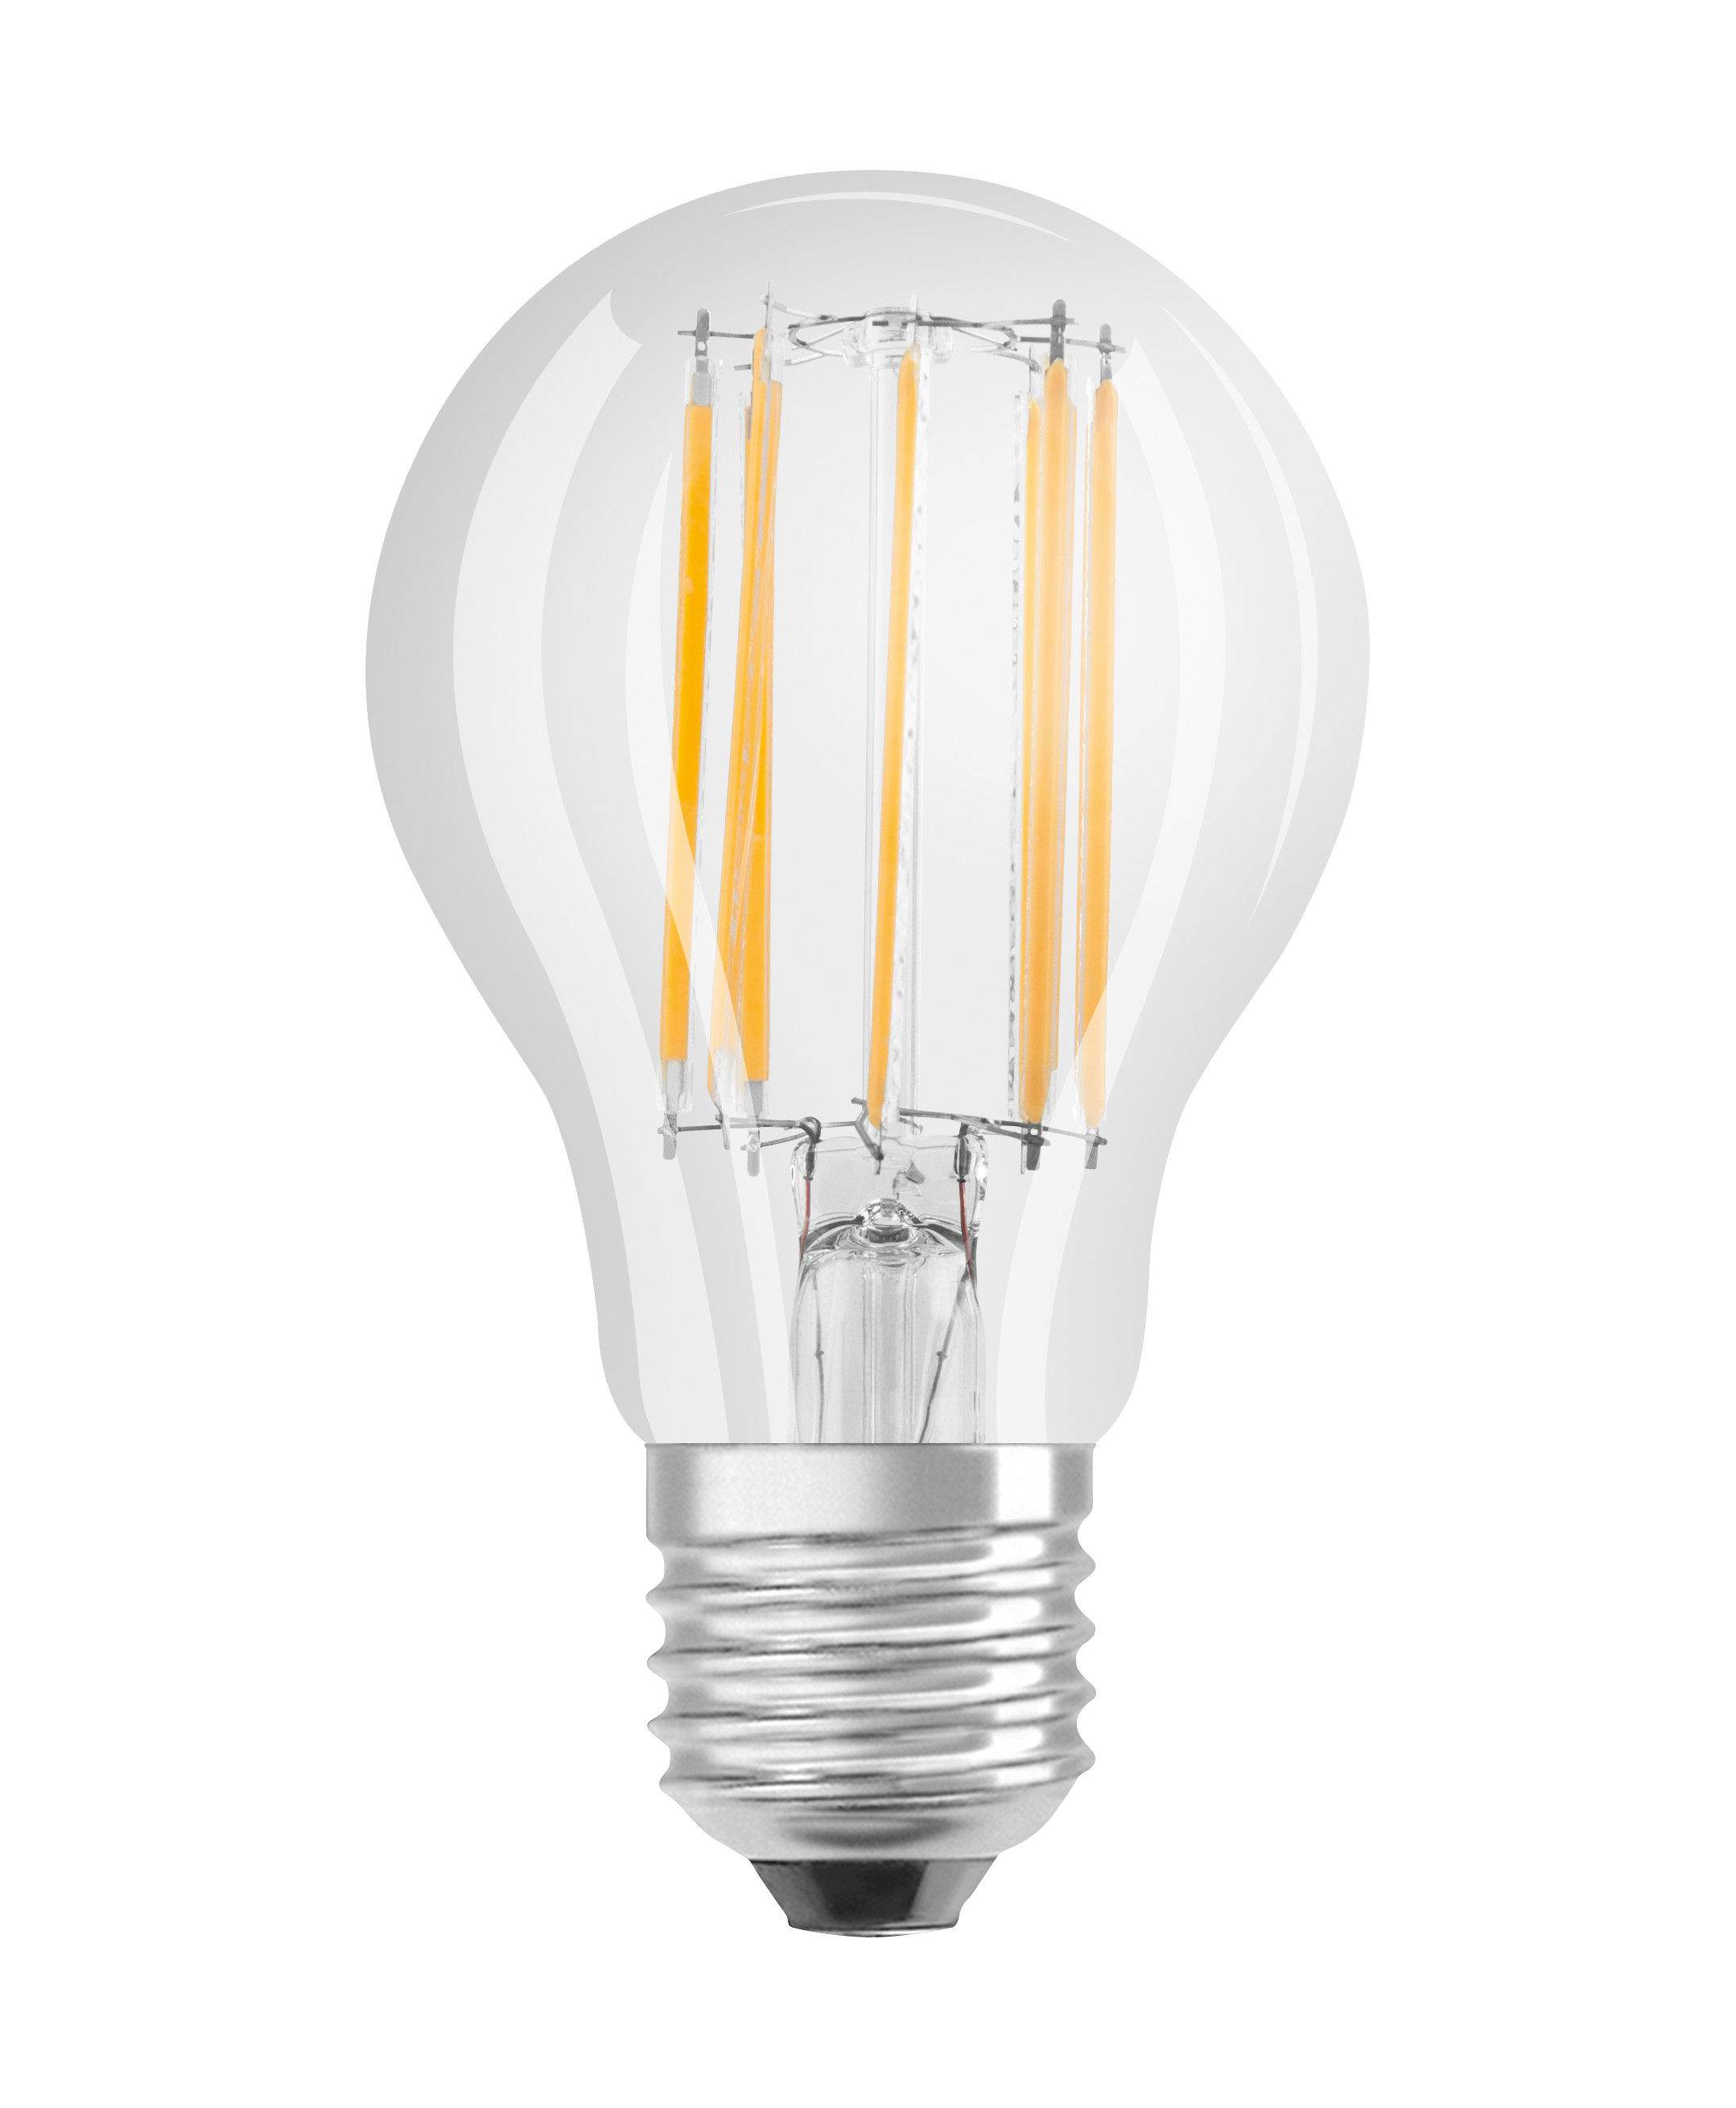 E27 standard clear glass LED bulb, 6.5W, warm white.